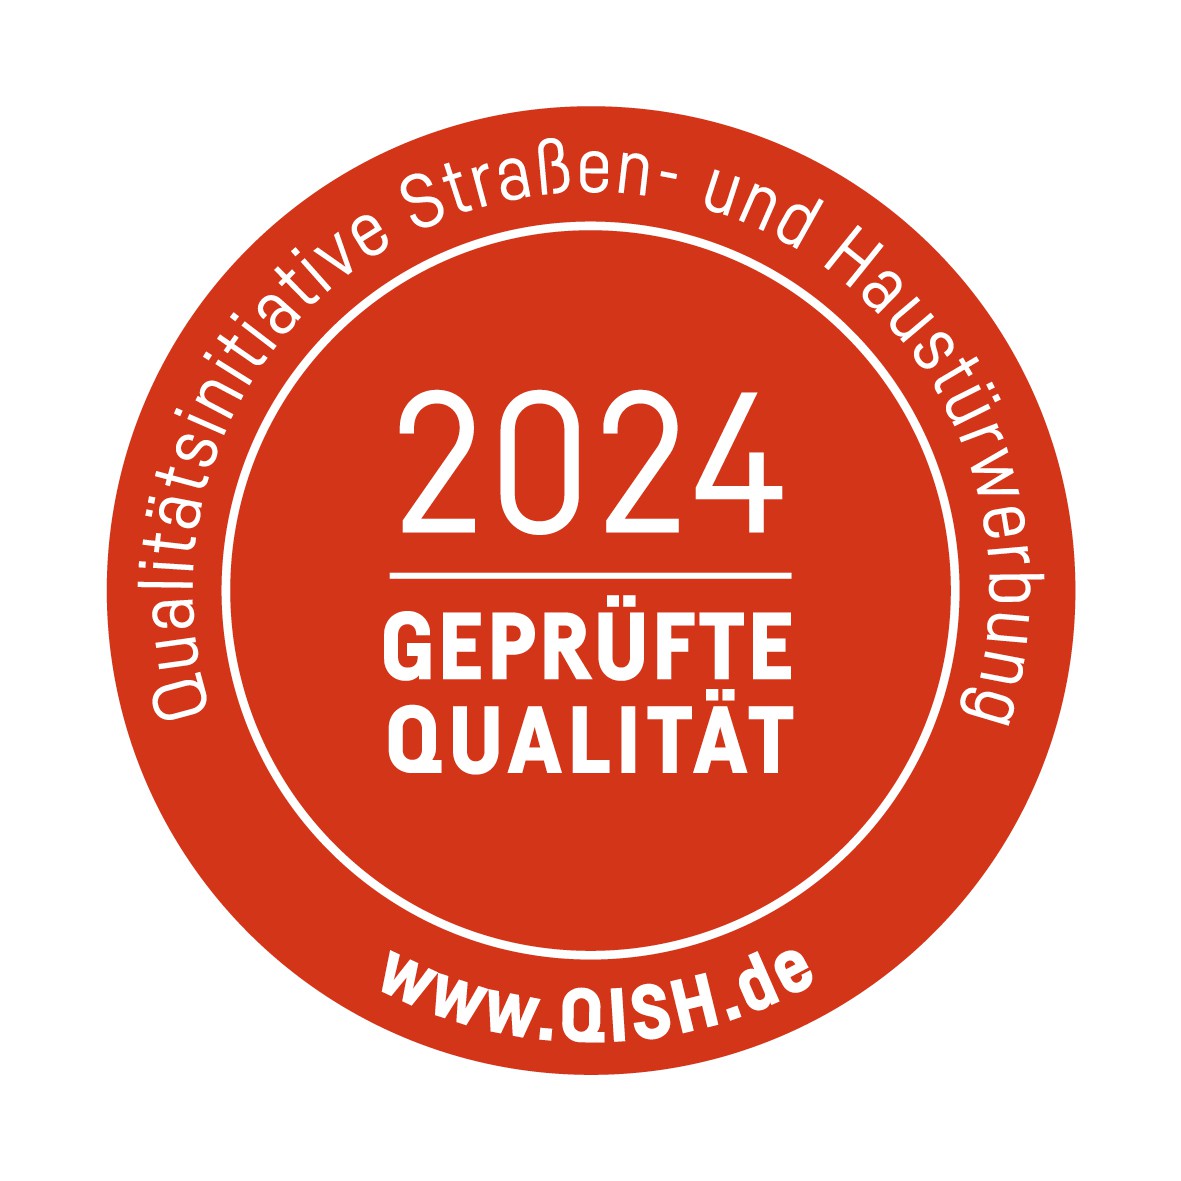 Award: QISH Qualitätsinitiative Straßen- und Haustürwerbung